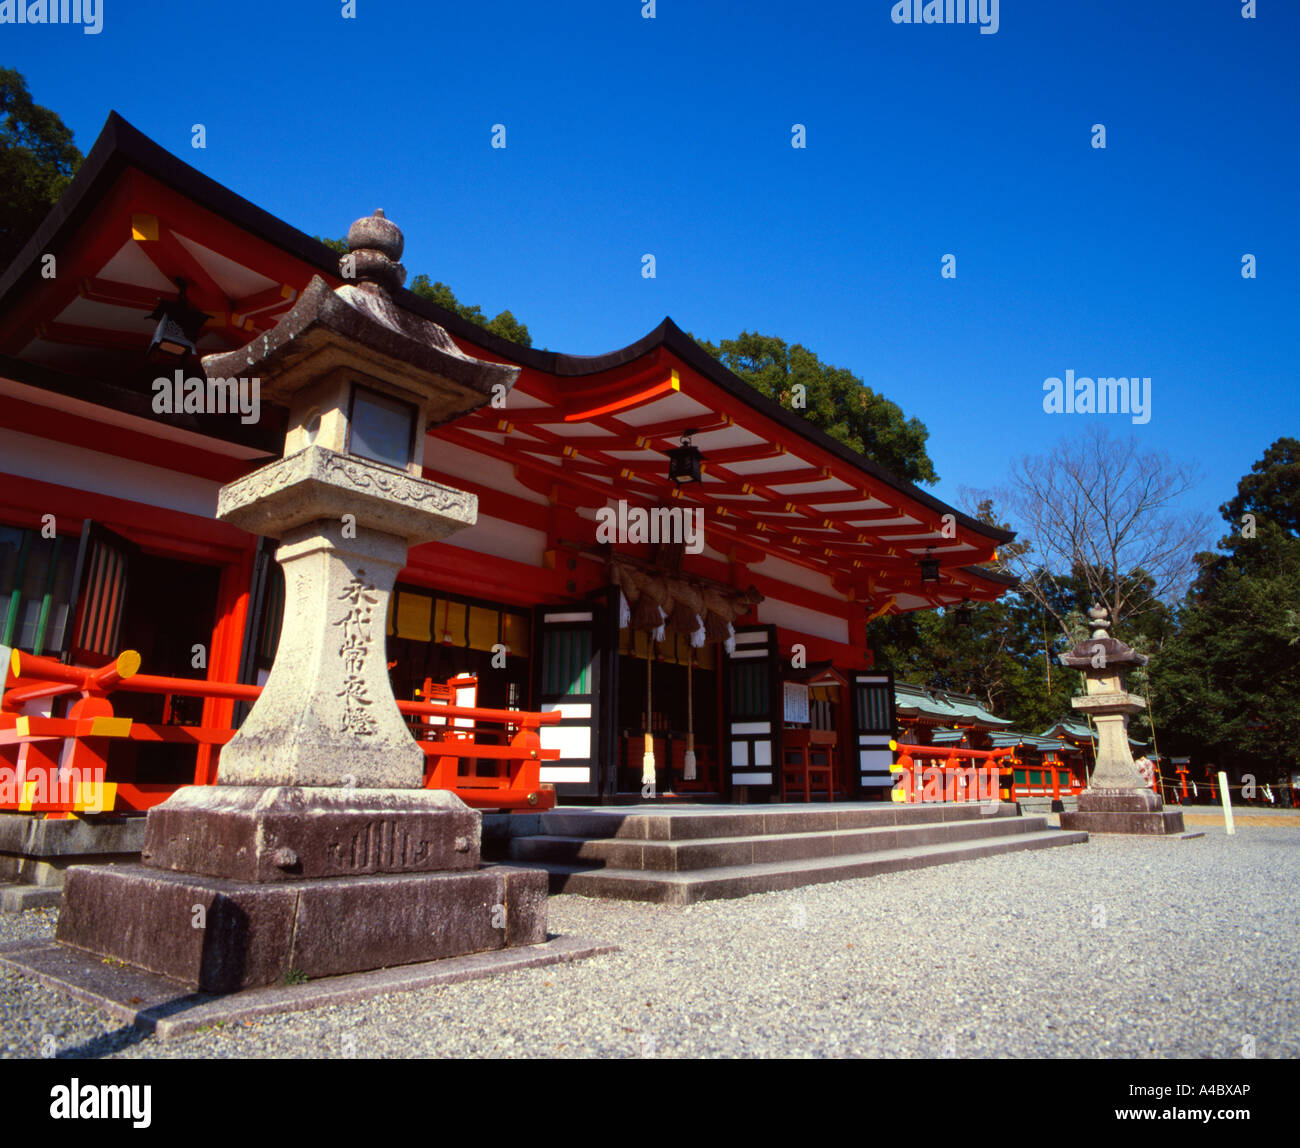 Kumano Hayatama Taisha, Santuario, Sitio del Patrimonio Mundial, la ciudad de Shingu, Prefectura de Wakayama, Japón Foto de stock